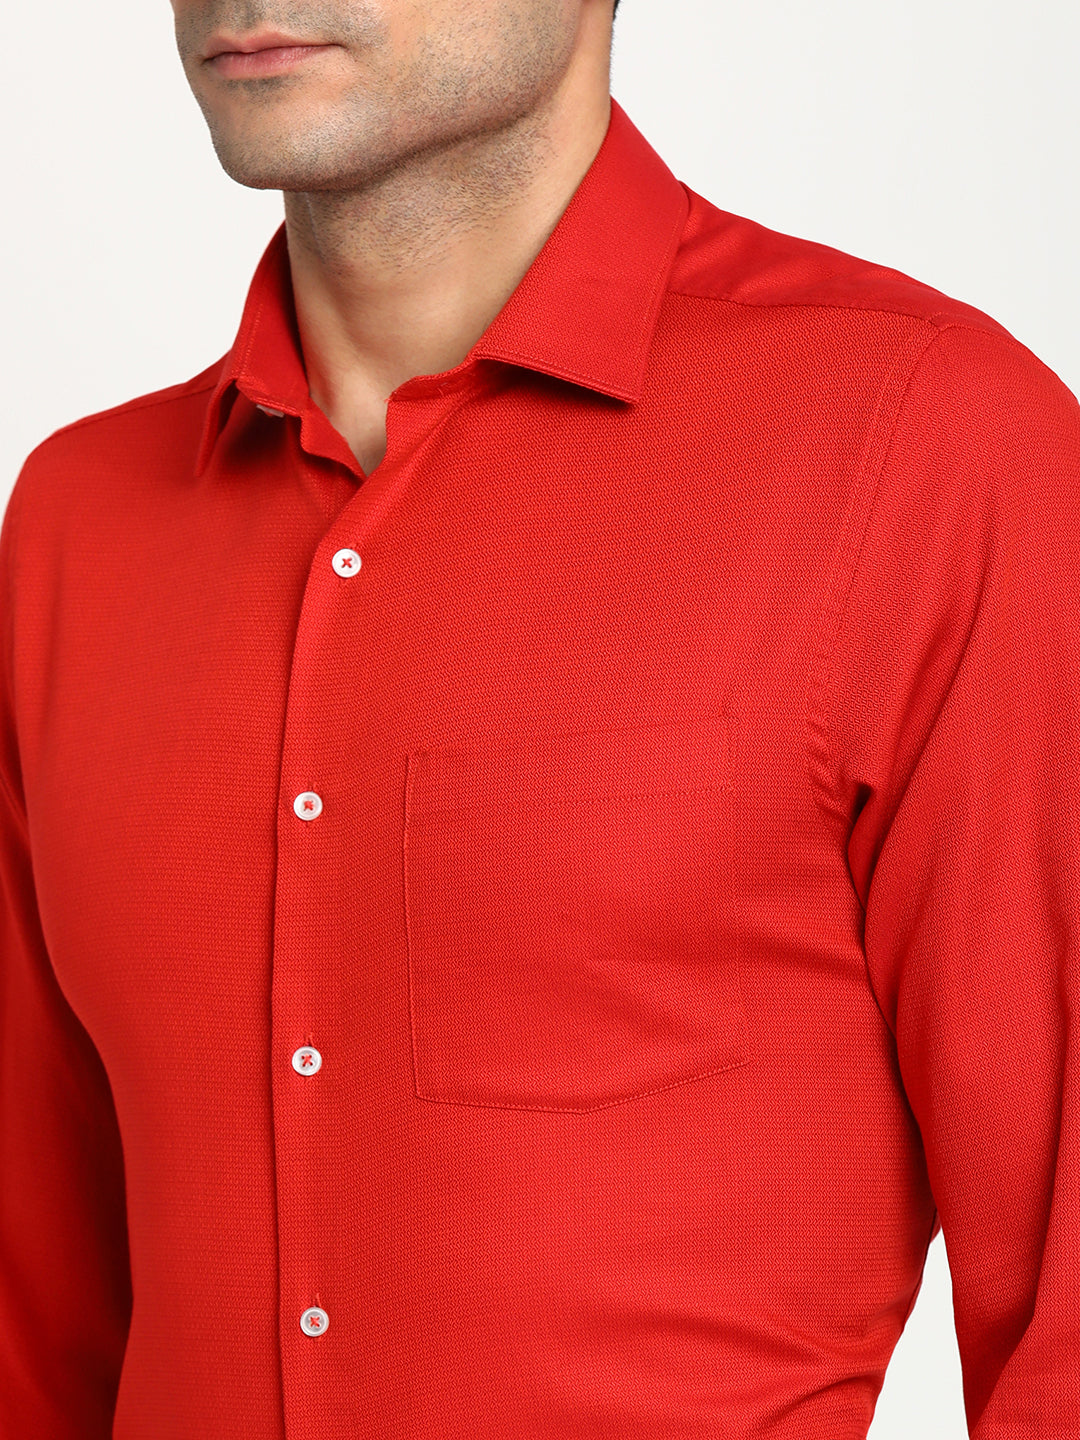 Red Cotton Self Design Slim Fit Shirt